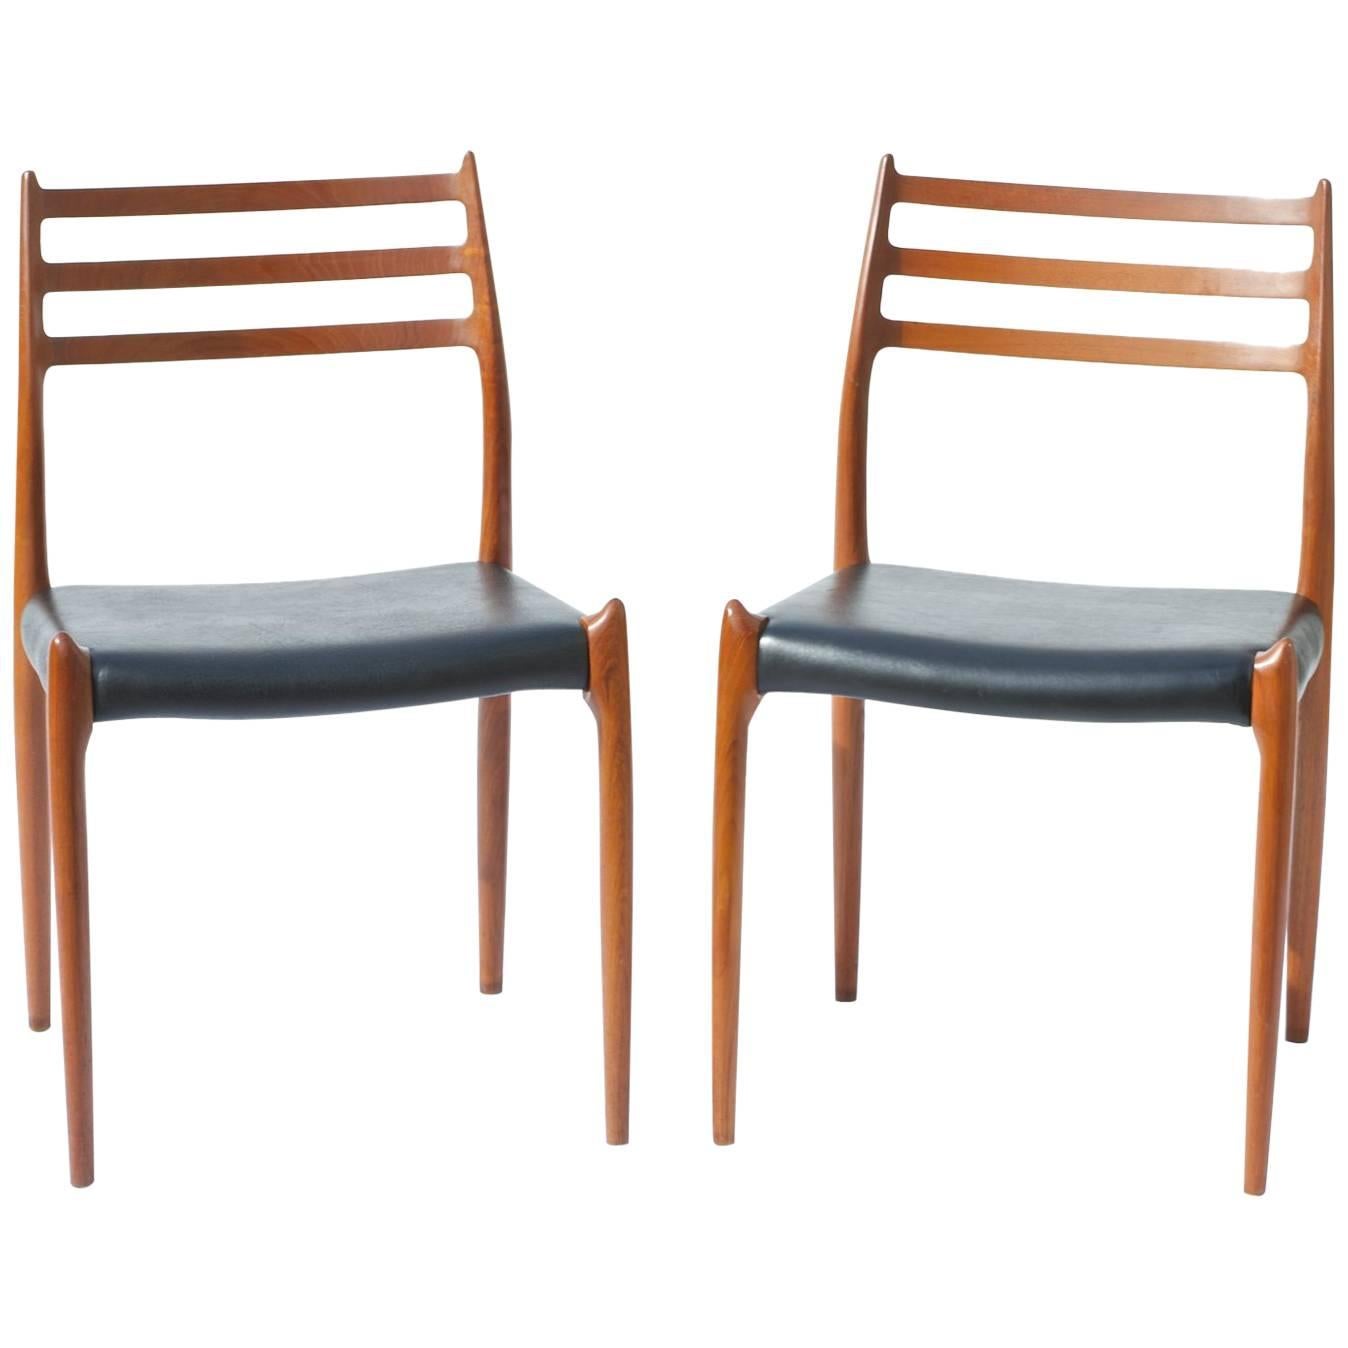 N.O. Moller Model 78 Danish Modern Dining Chairs in Teak, Pair For Sale